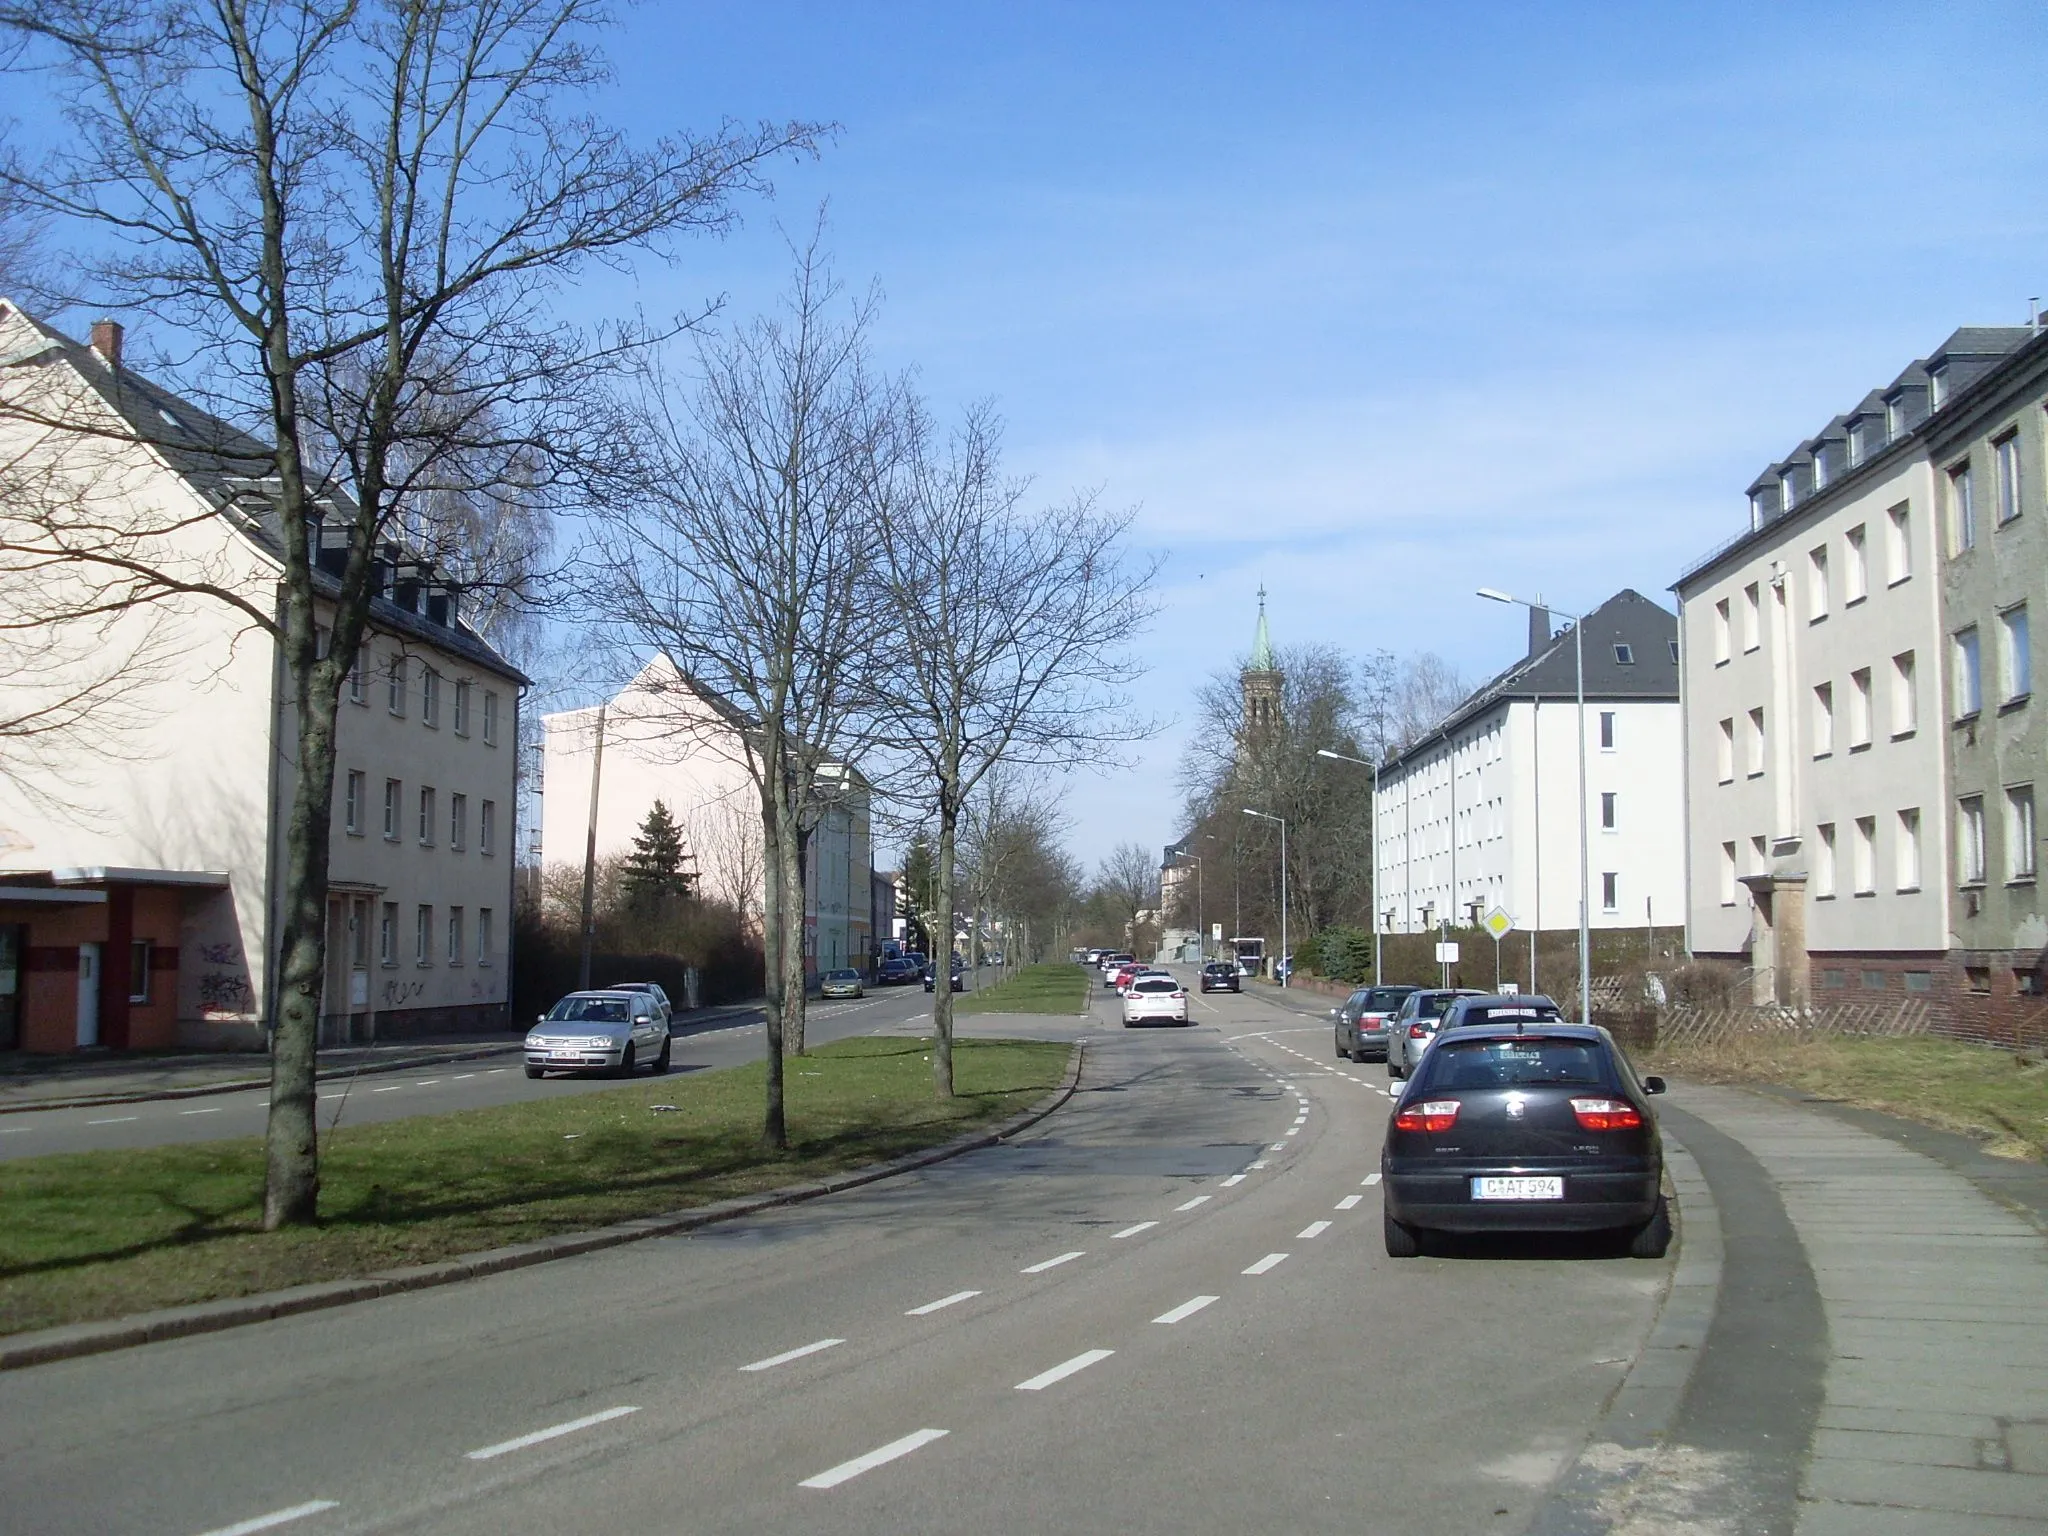 Image of Chemnitz